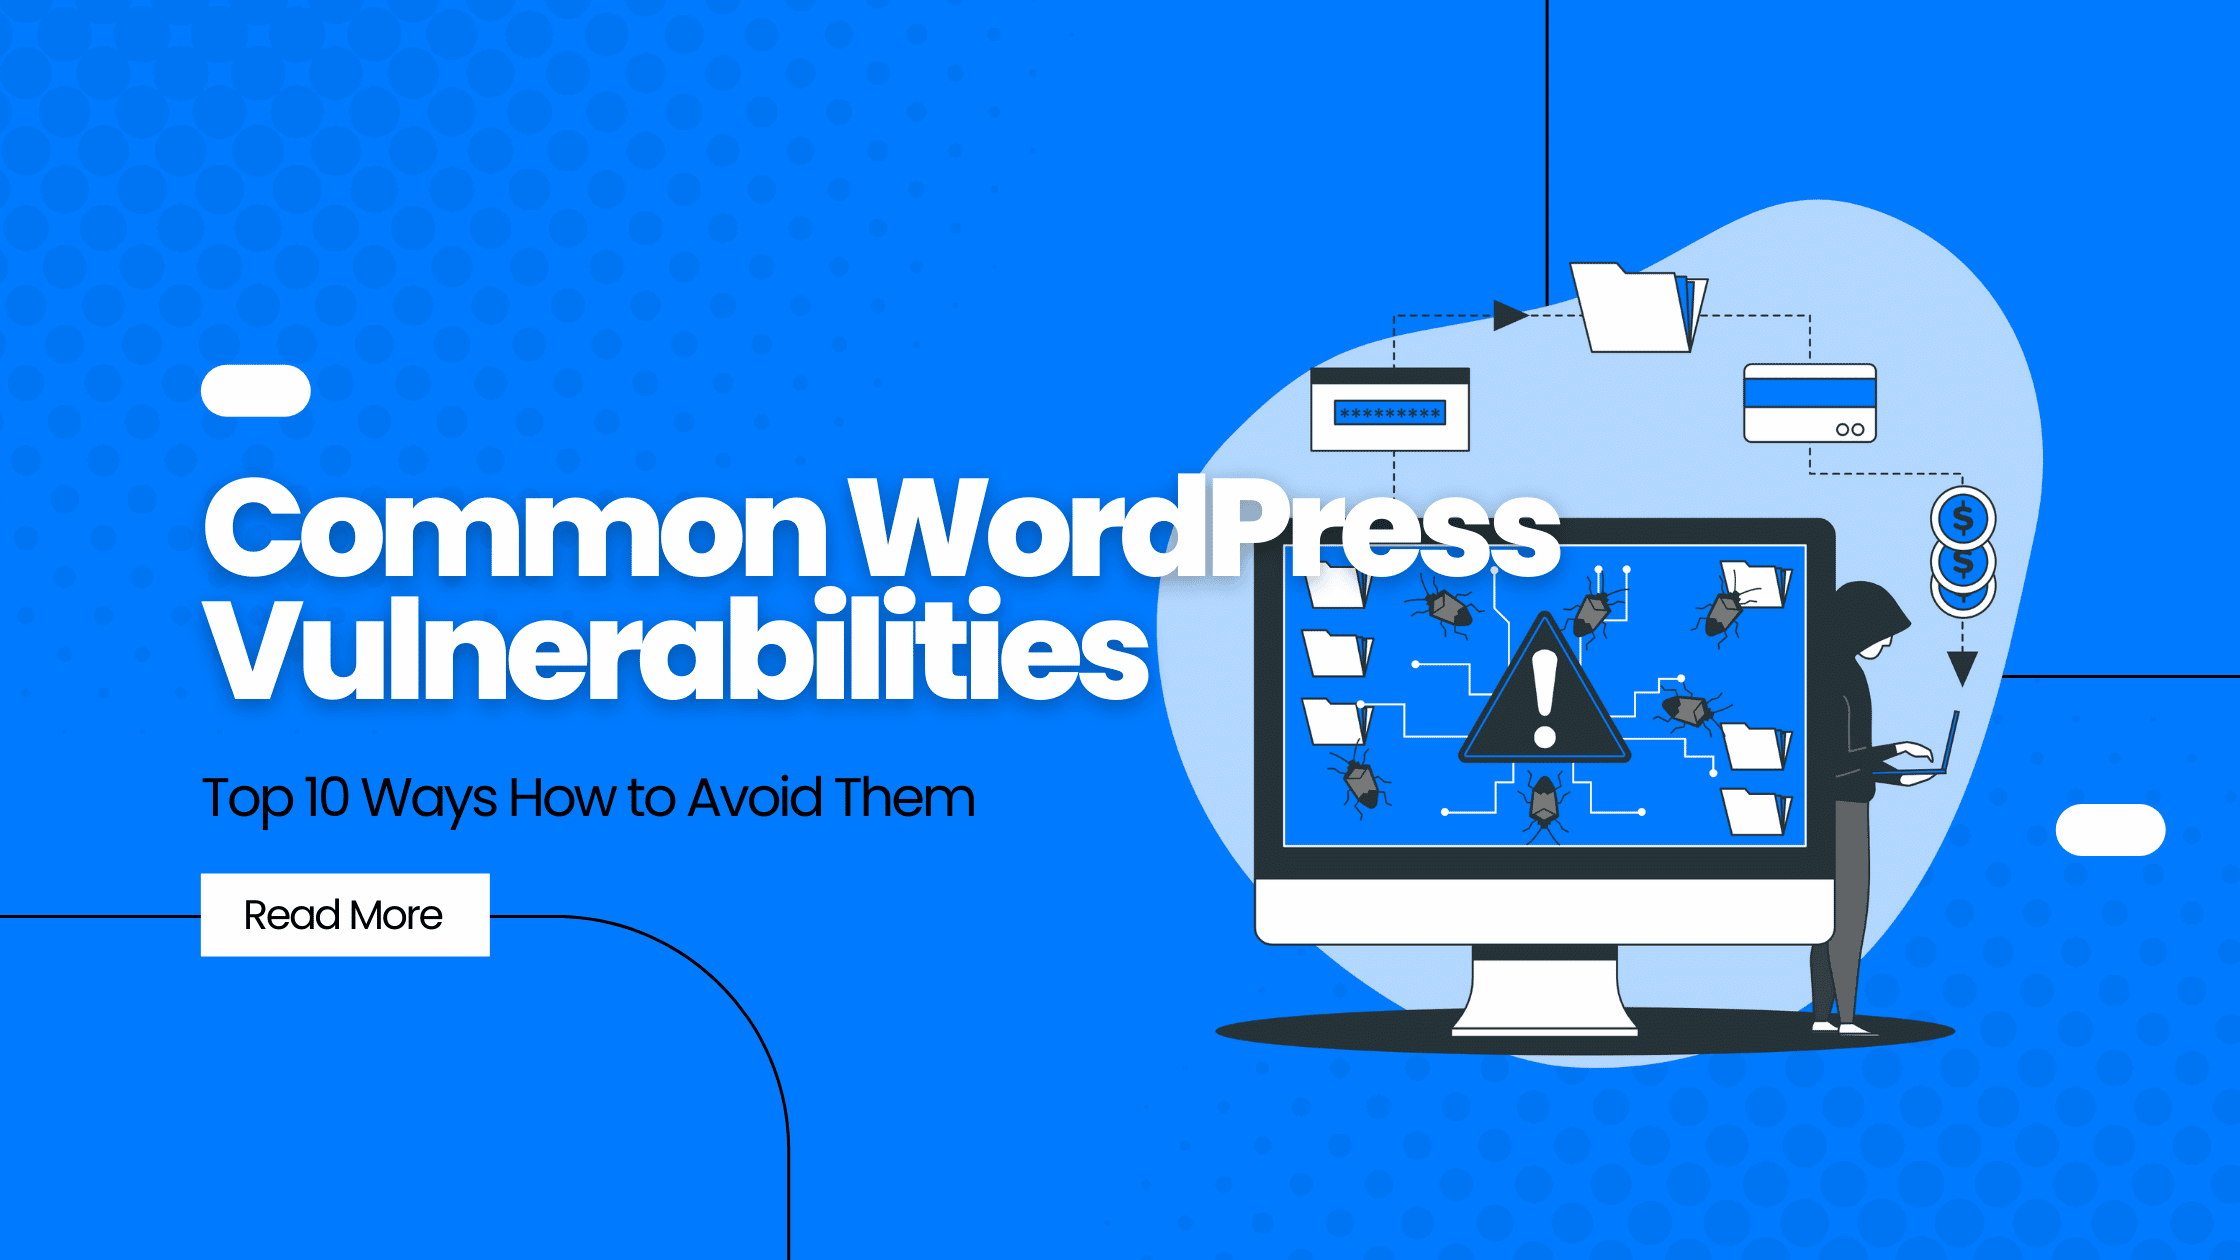 How to Avoid Common WordPress Vulnerabilities